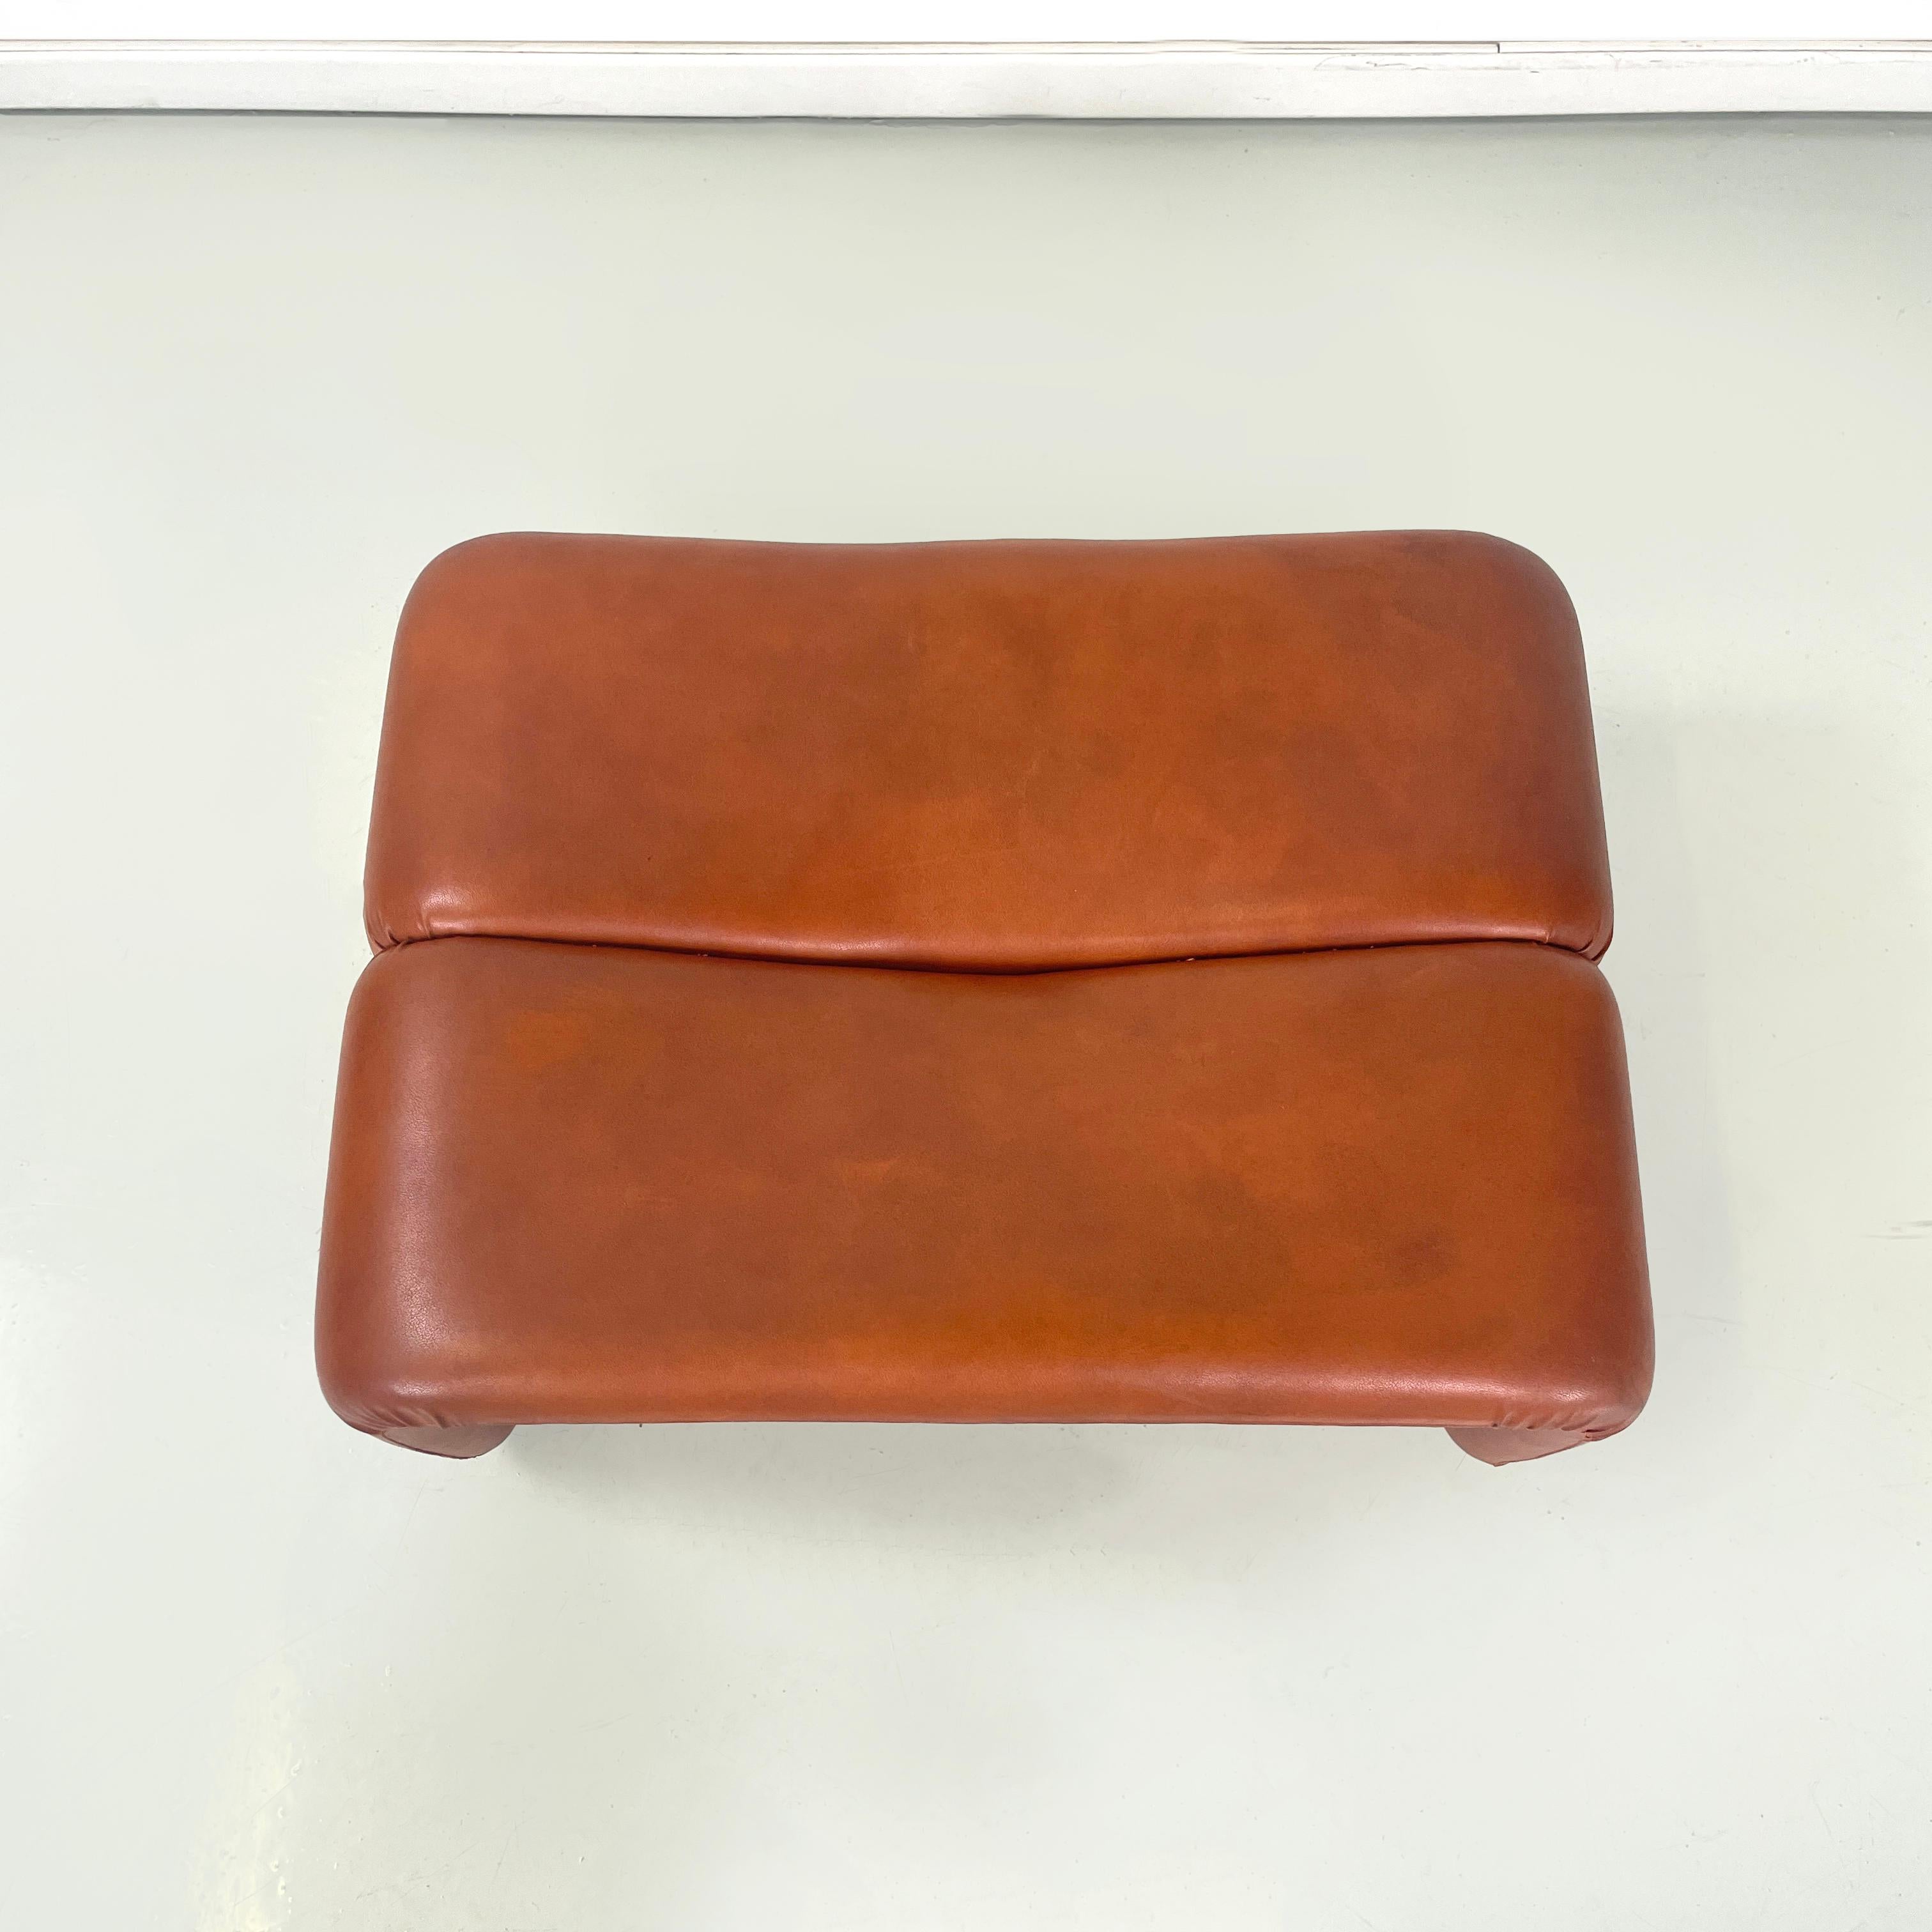 Late 20th Century Italian modern Brown leather Poufs Coronado by Afra Tobia Scarpa for B&B, 1970s